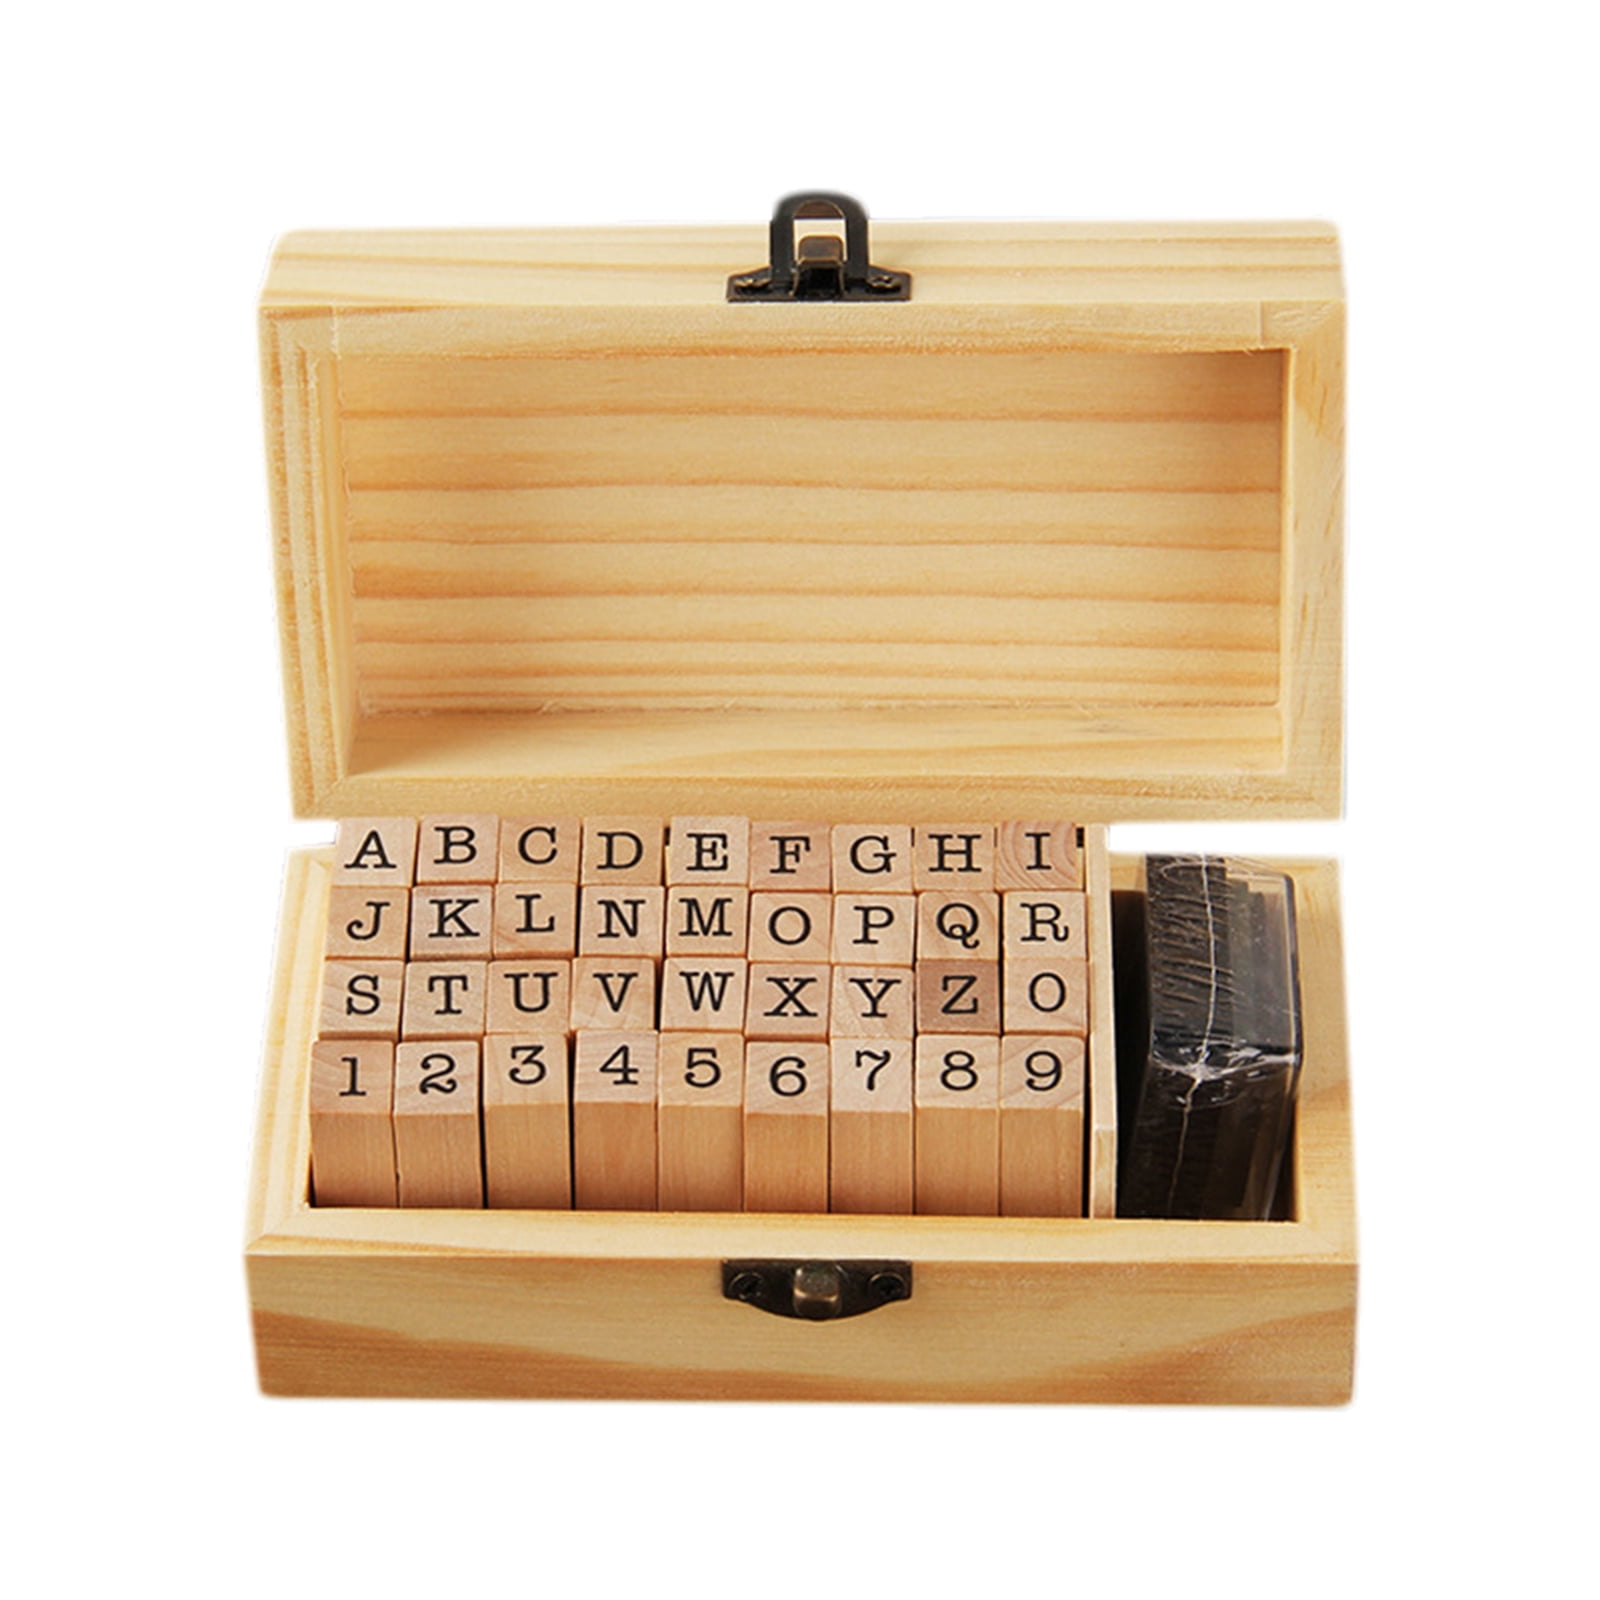 30 Piece Wooden Box Lower Case and Symbols Alphabet Rubber Stamp Set 